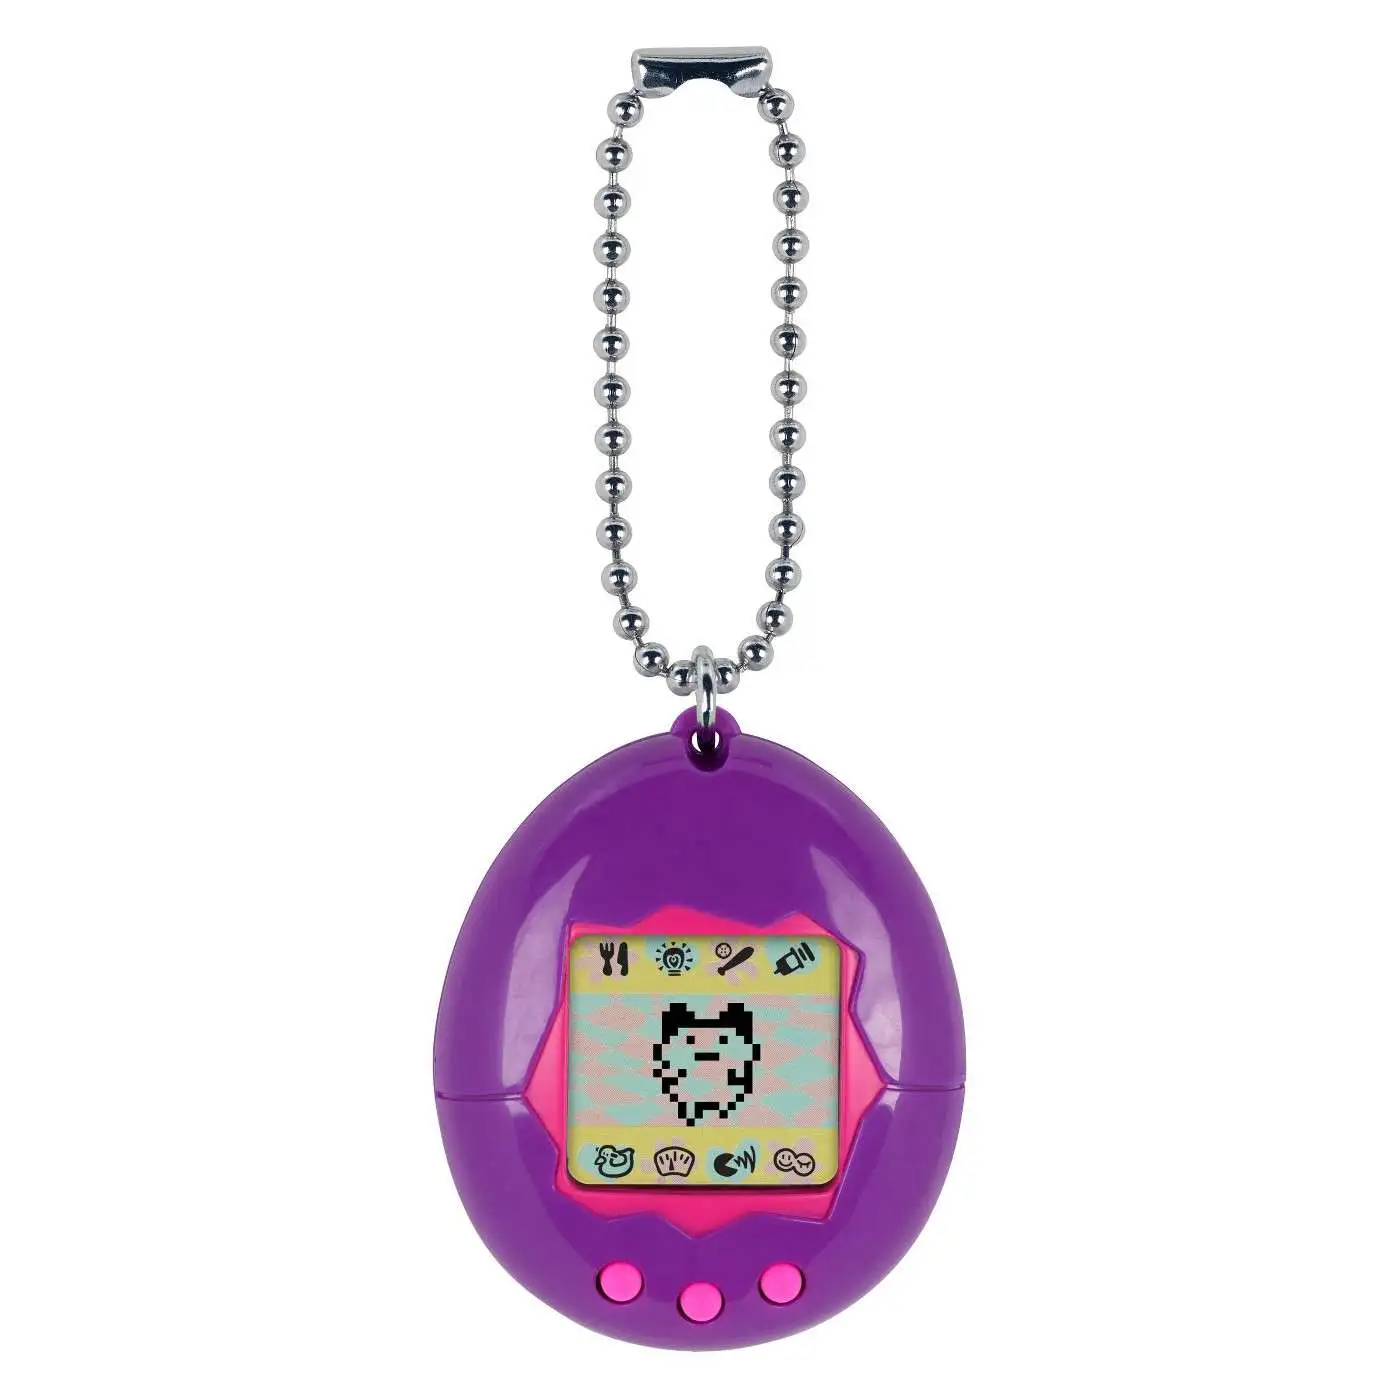 Tamagotchi 20th Anniversary Series 2 Translucent Purple 1.5-Inch Virtual Pet Toy 